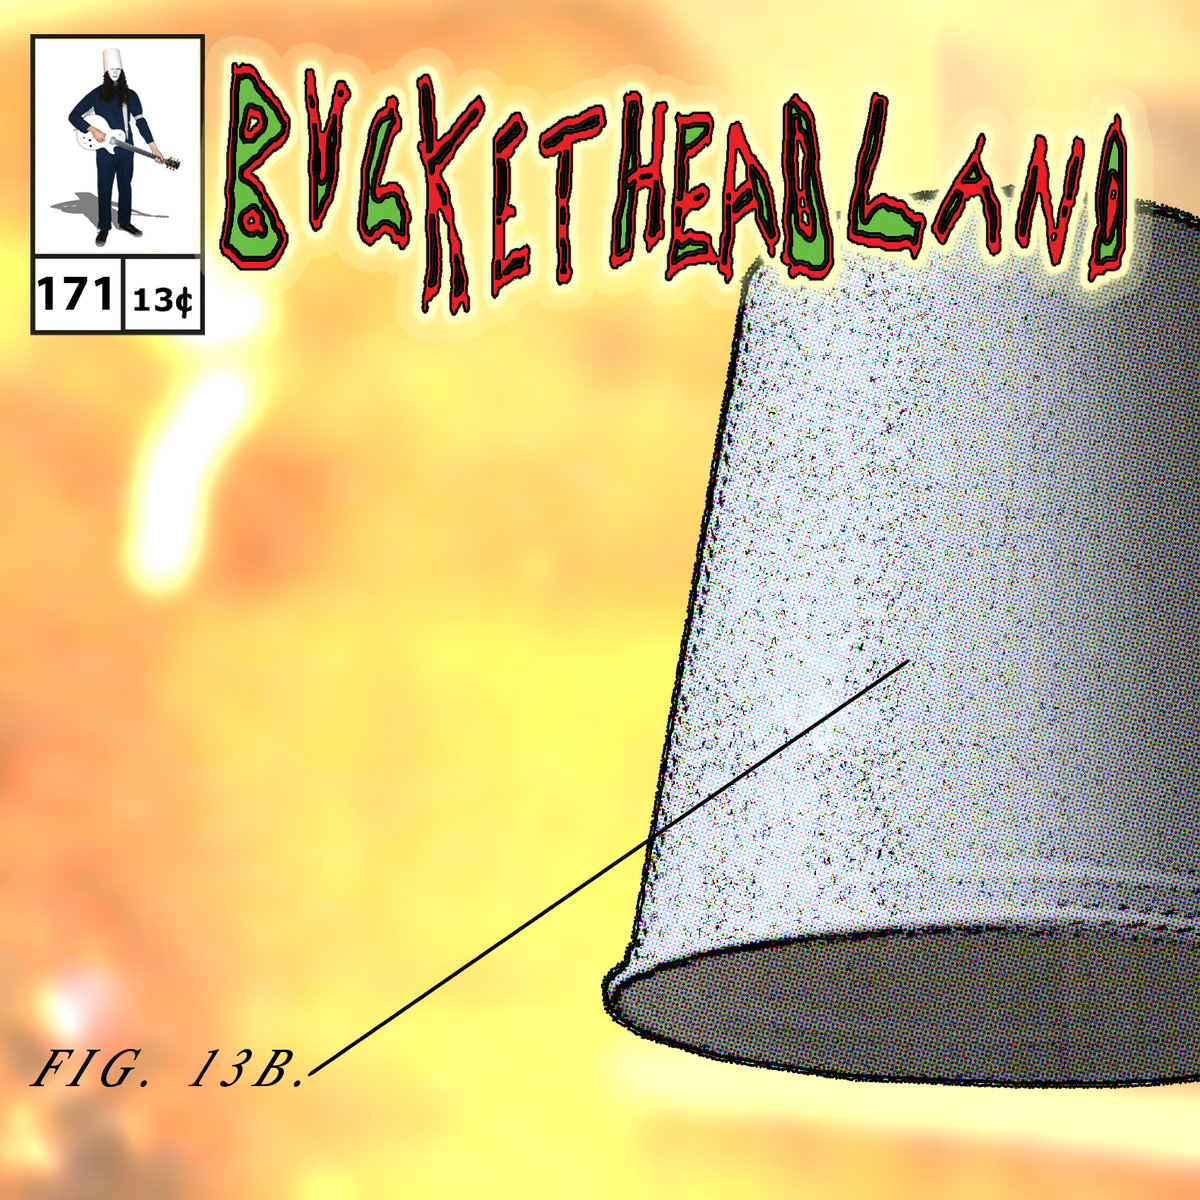 Buckethead - Pike 171: A Ghost Took My Homework (2015)